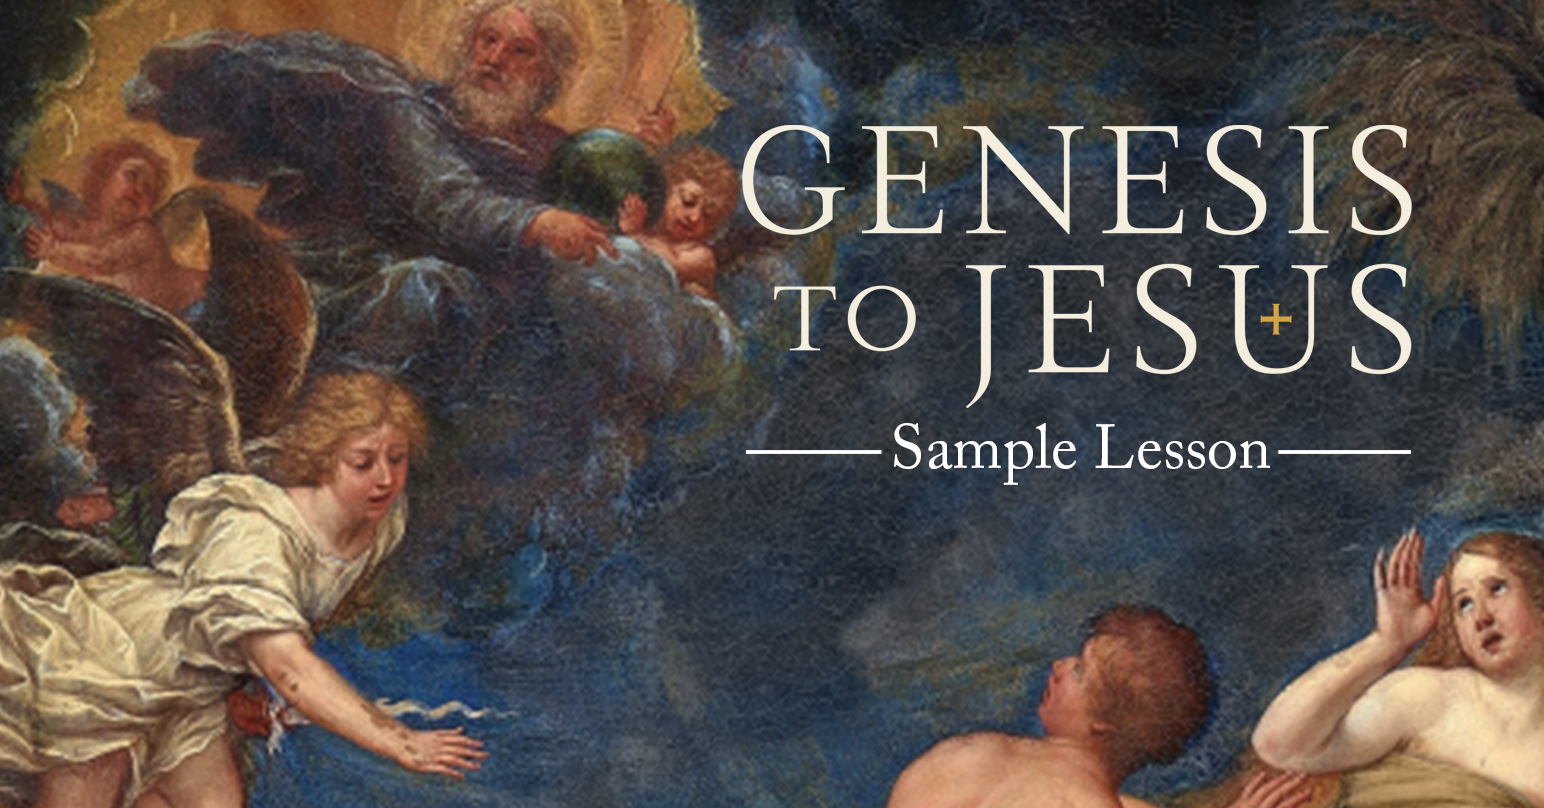 Genesis to Jesus, creation, seventh day, salvation history, matthew leonard